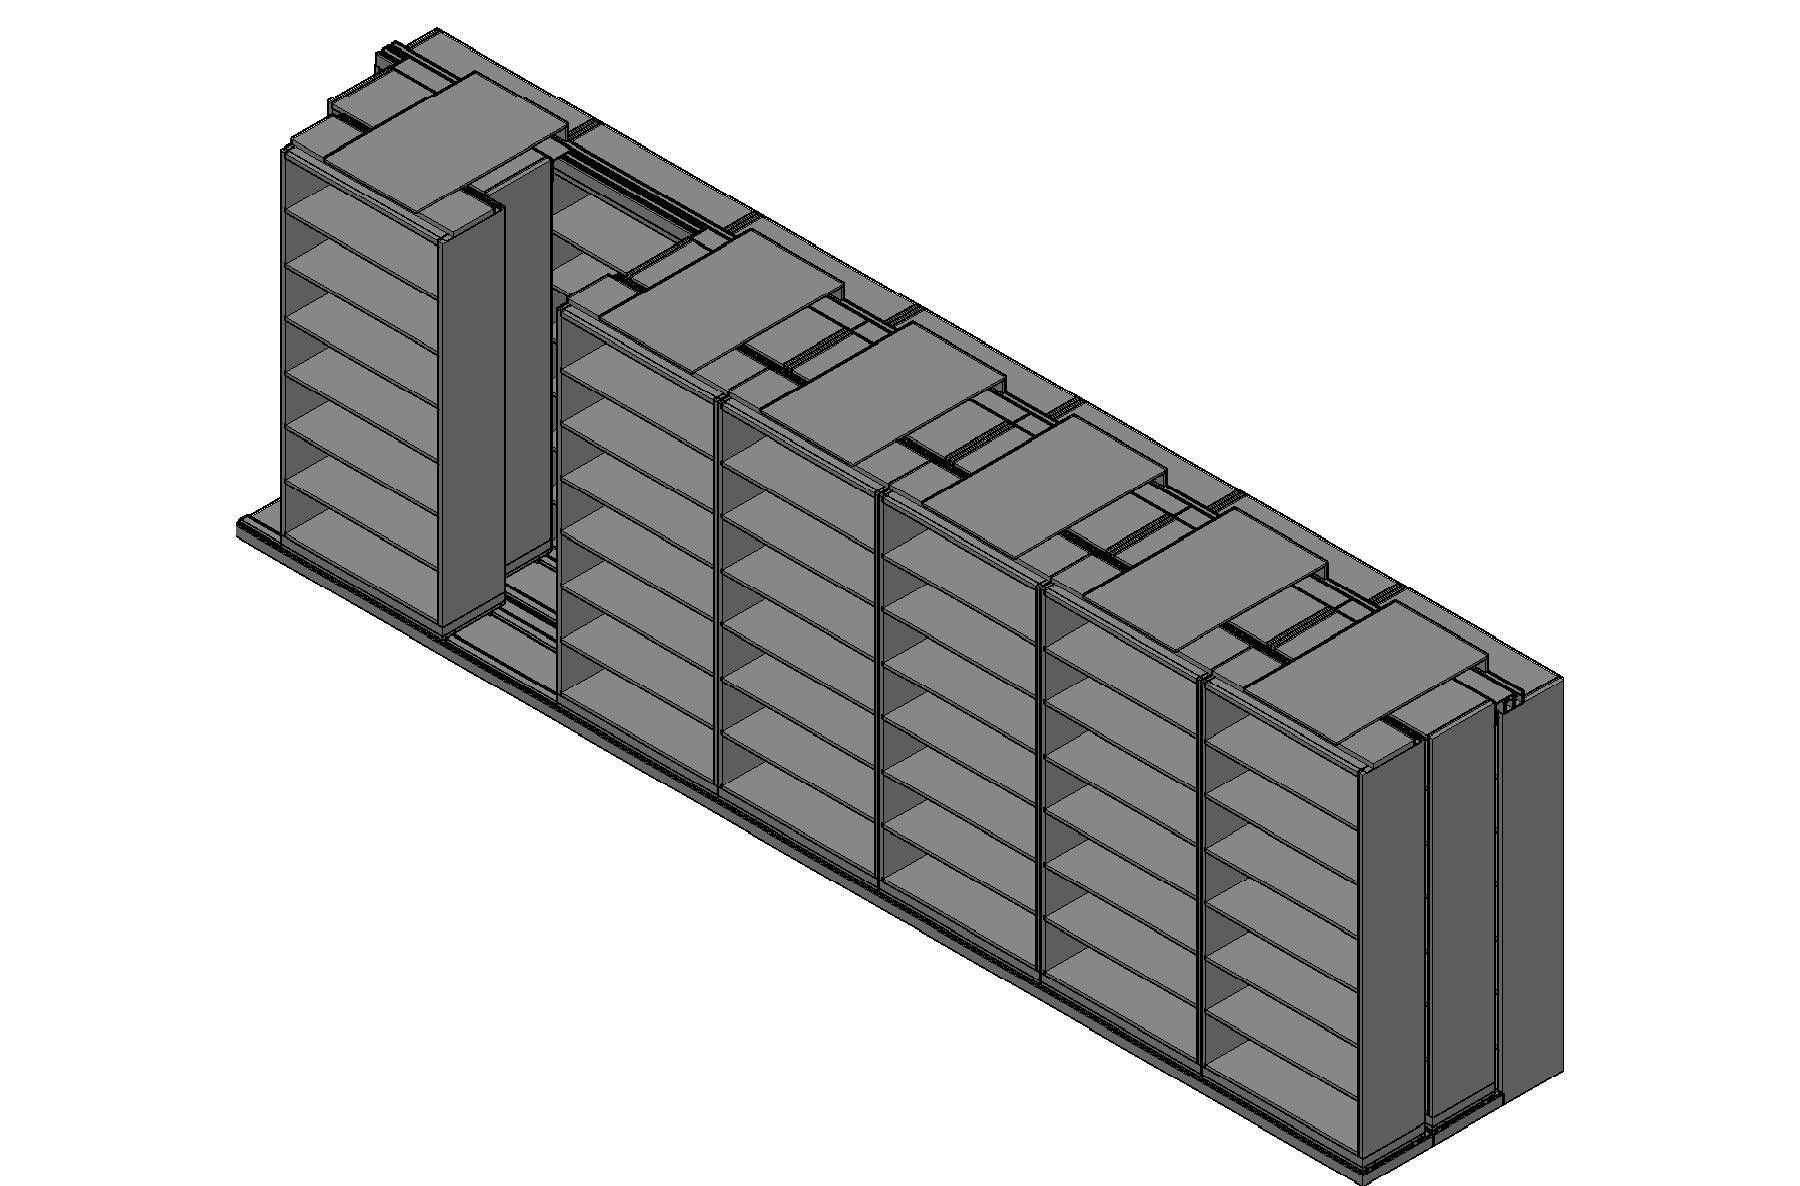 Box Size Sliding Shelves - 3 Rows Deep - 7 Levels - (42" x 16" Shelves) - 298" Total Width